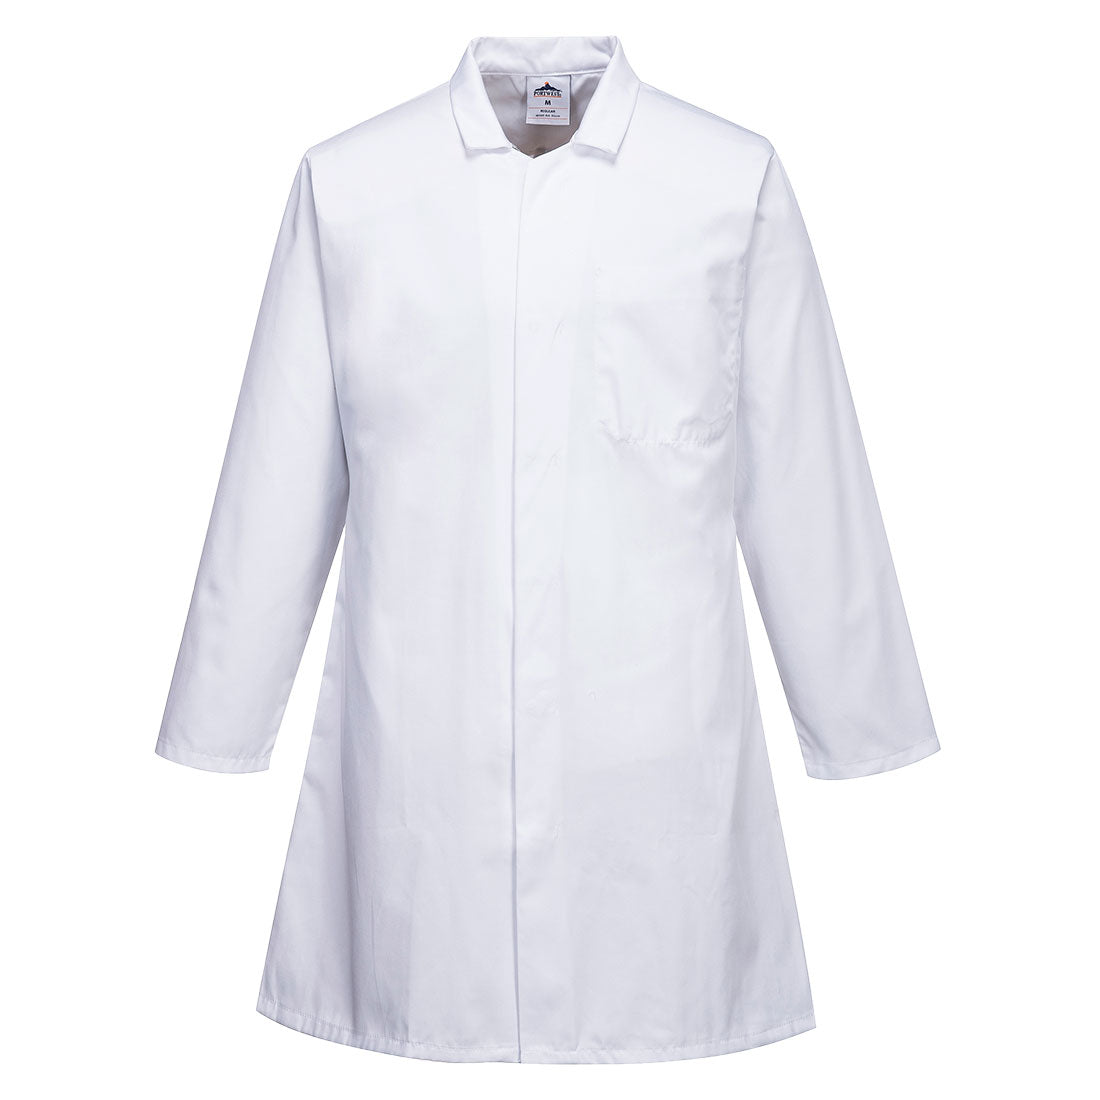 Portwest 2206 - White Mens Food Industry Coat, 3 Pockets sz Large Regular Apron jacket